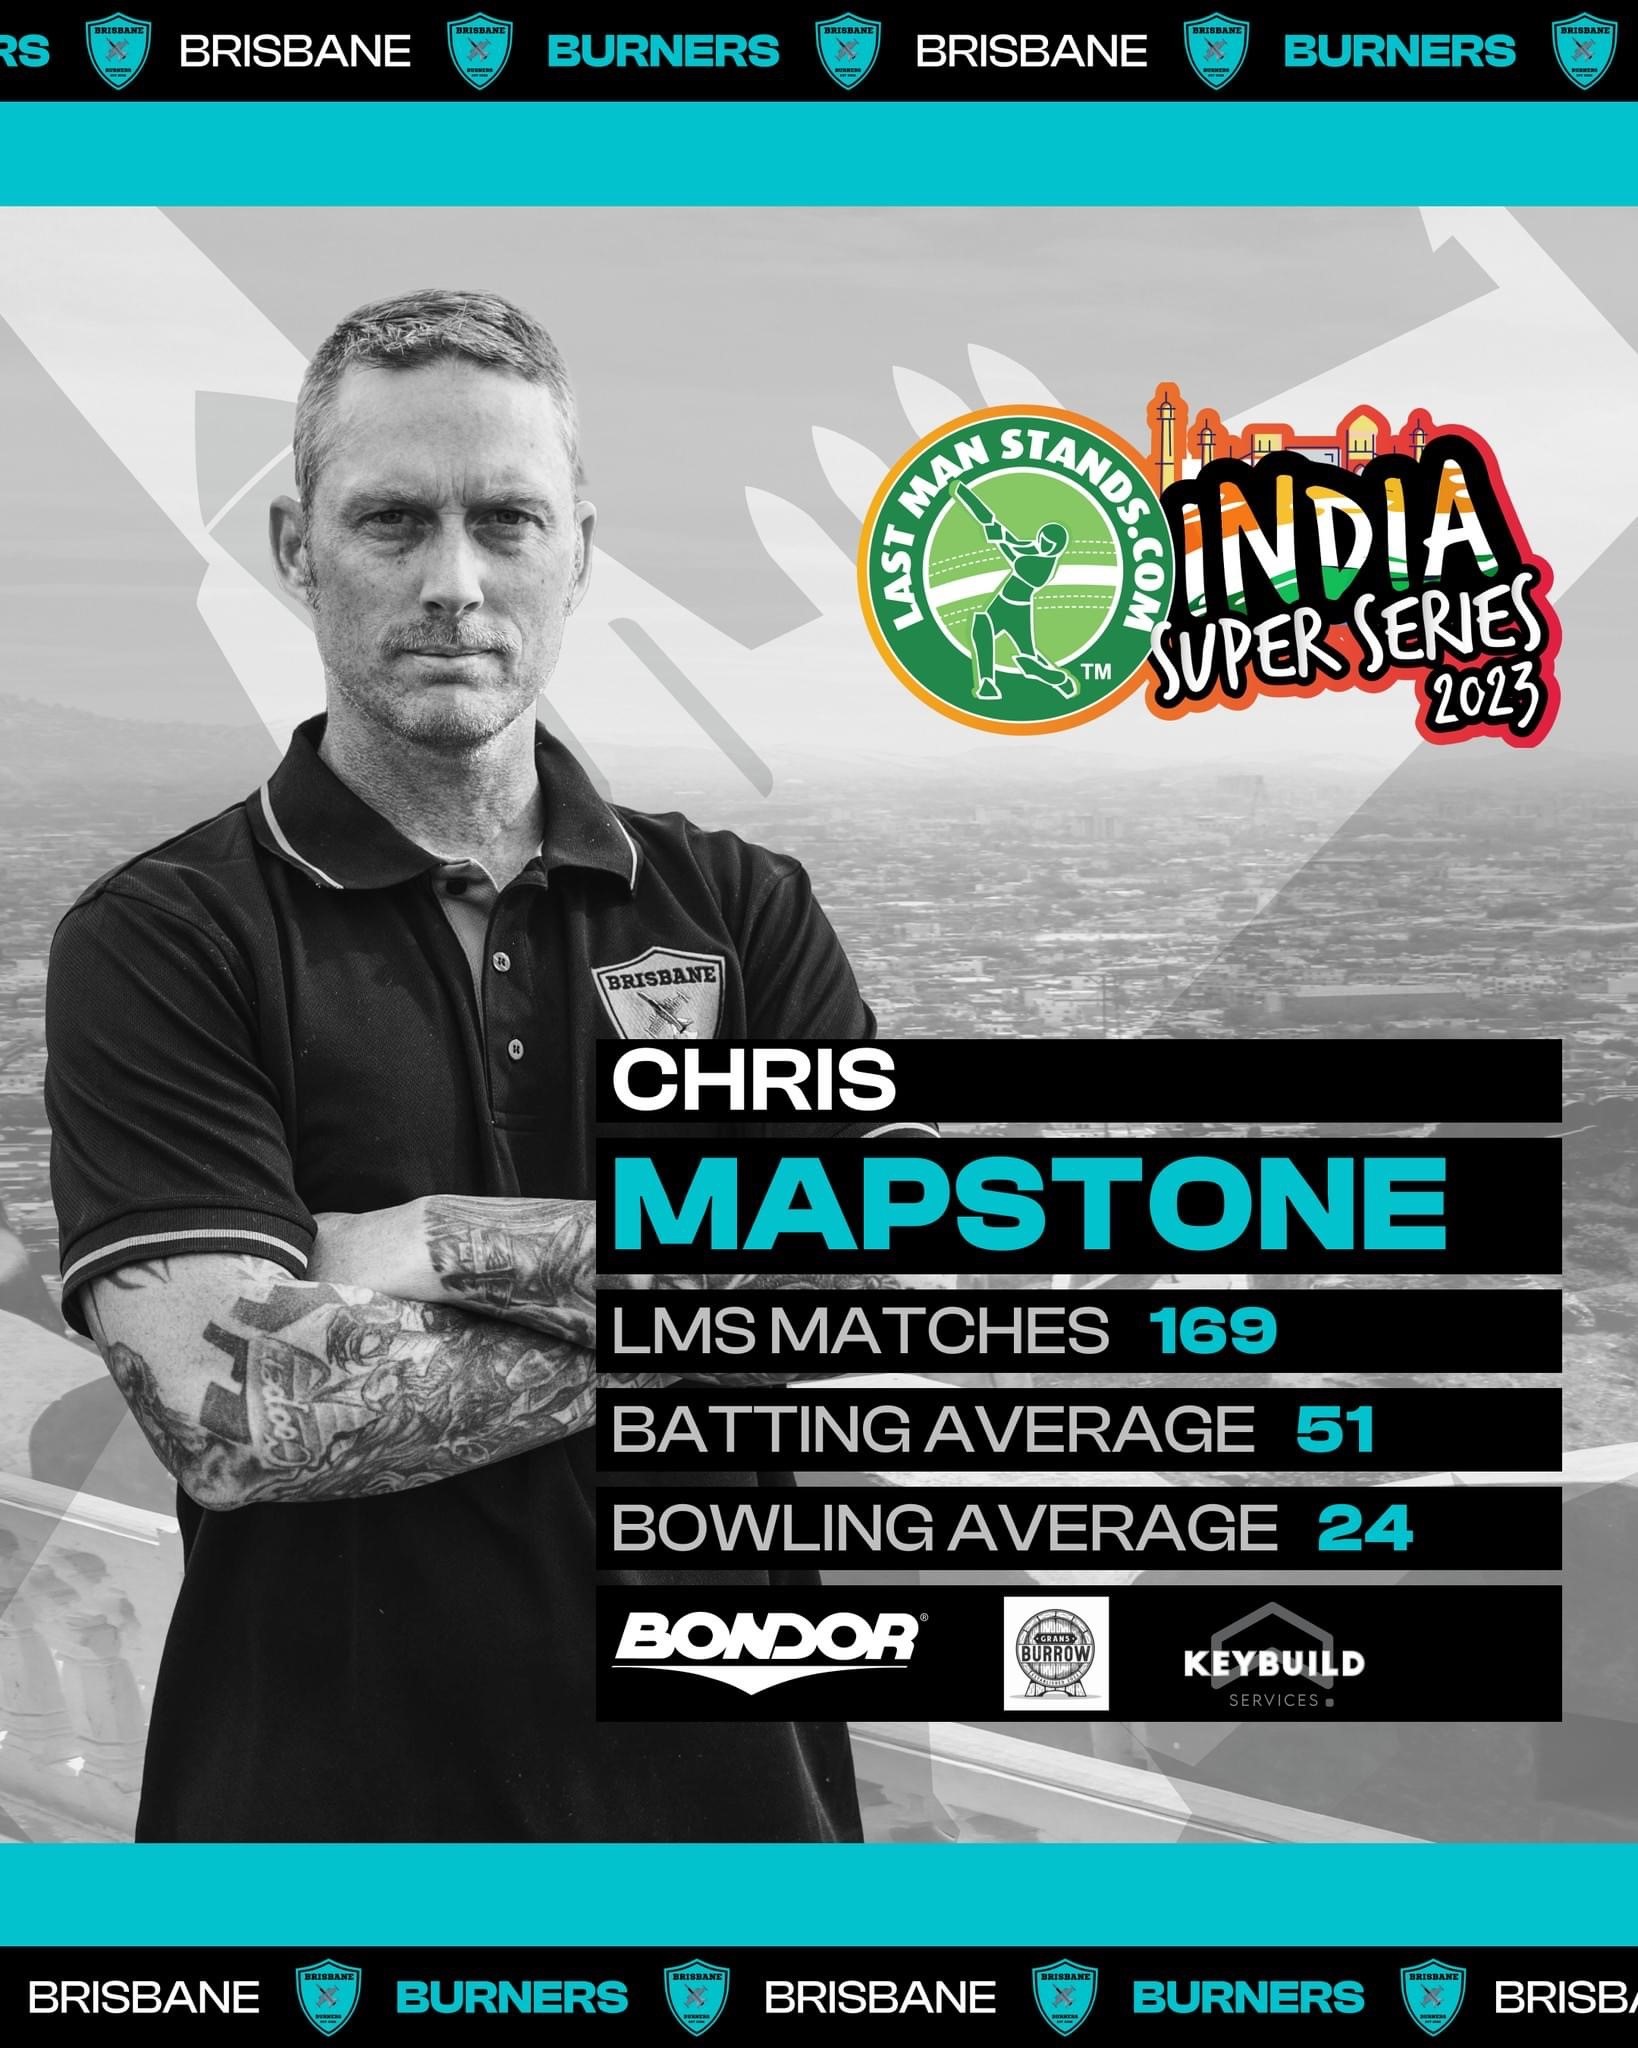 Chris Mapstone